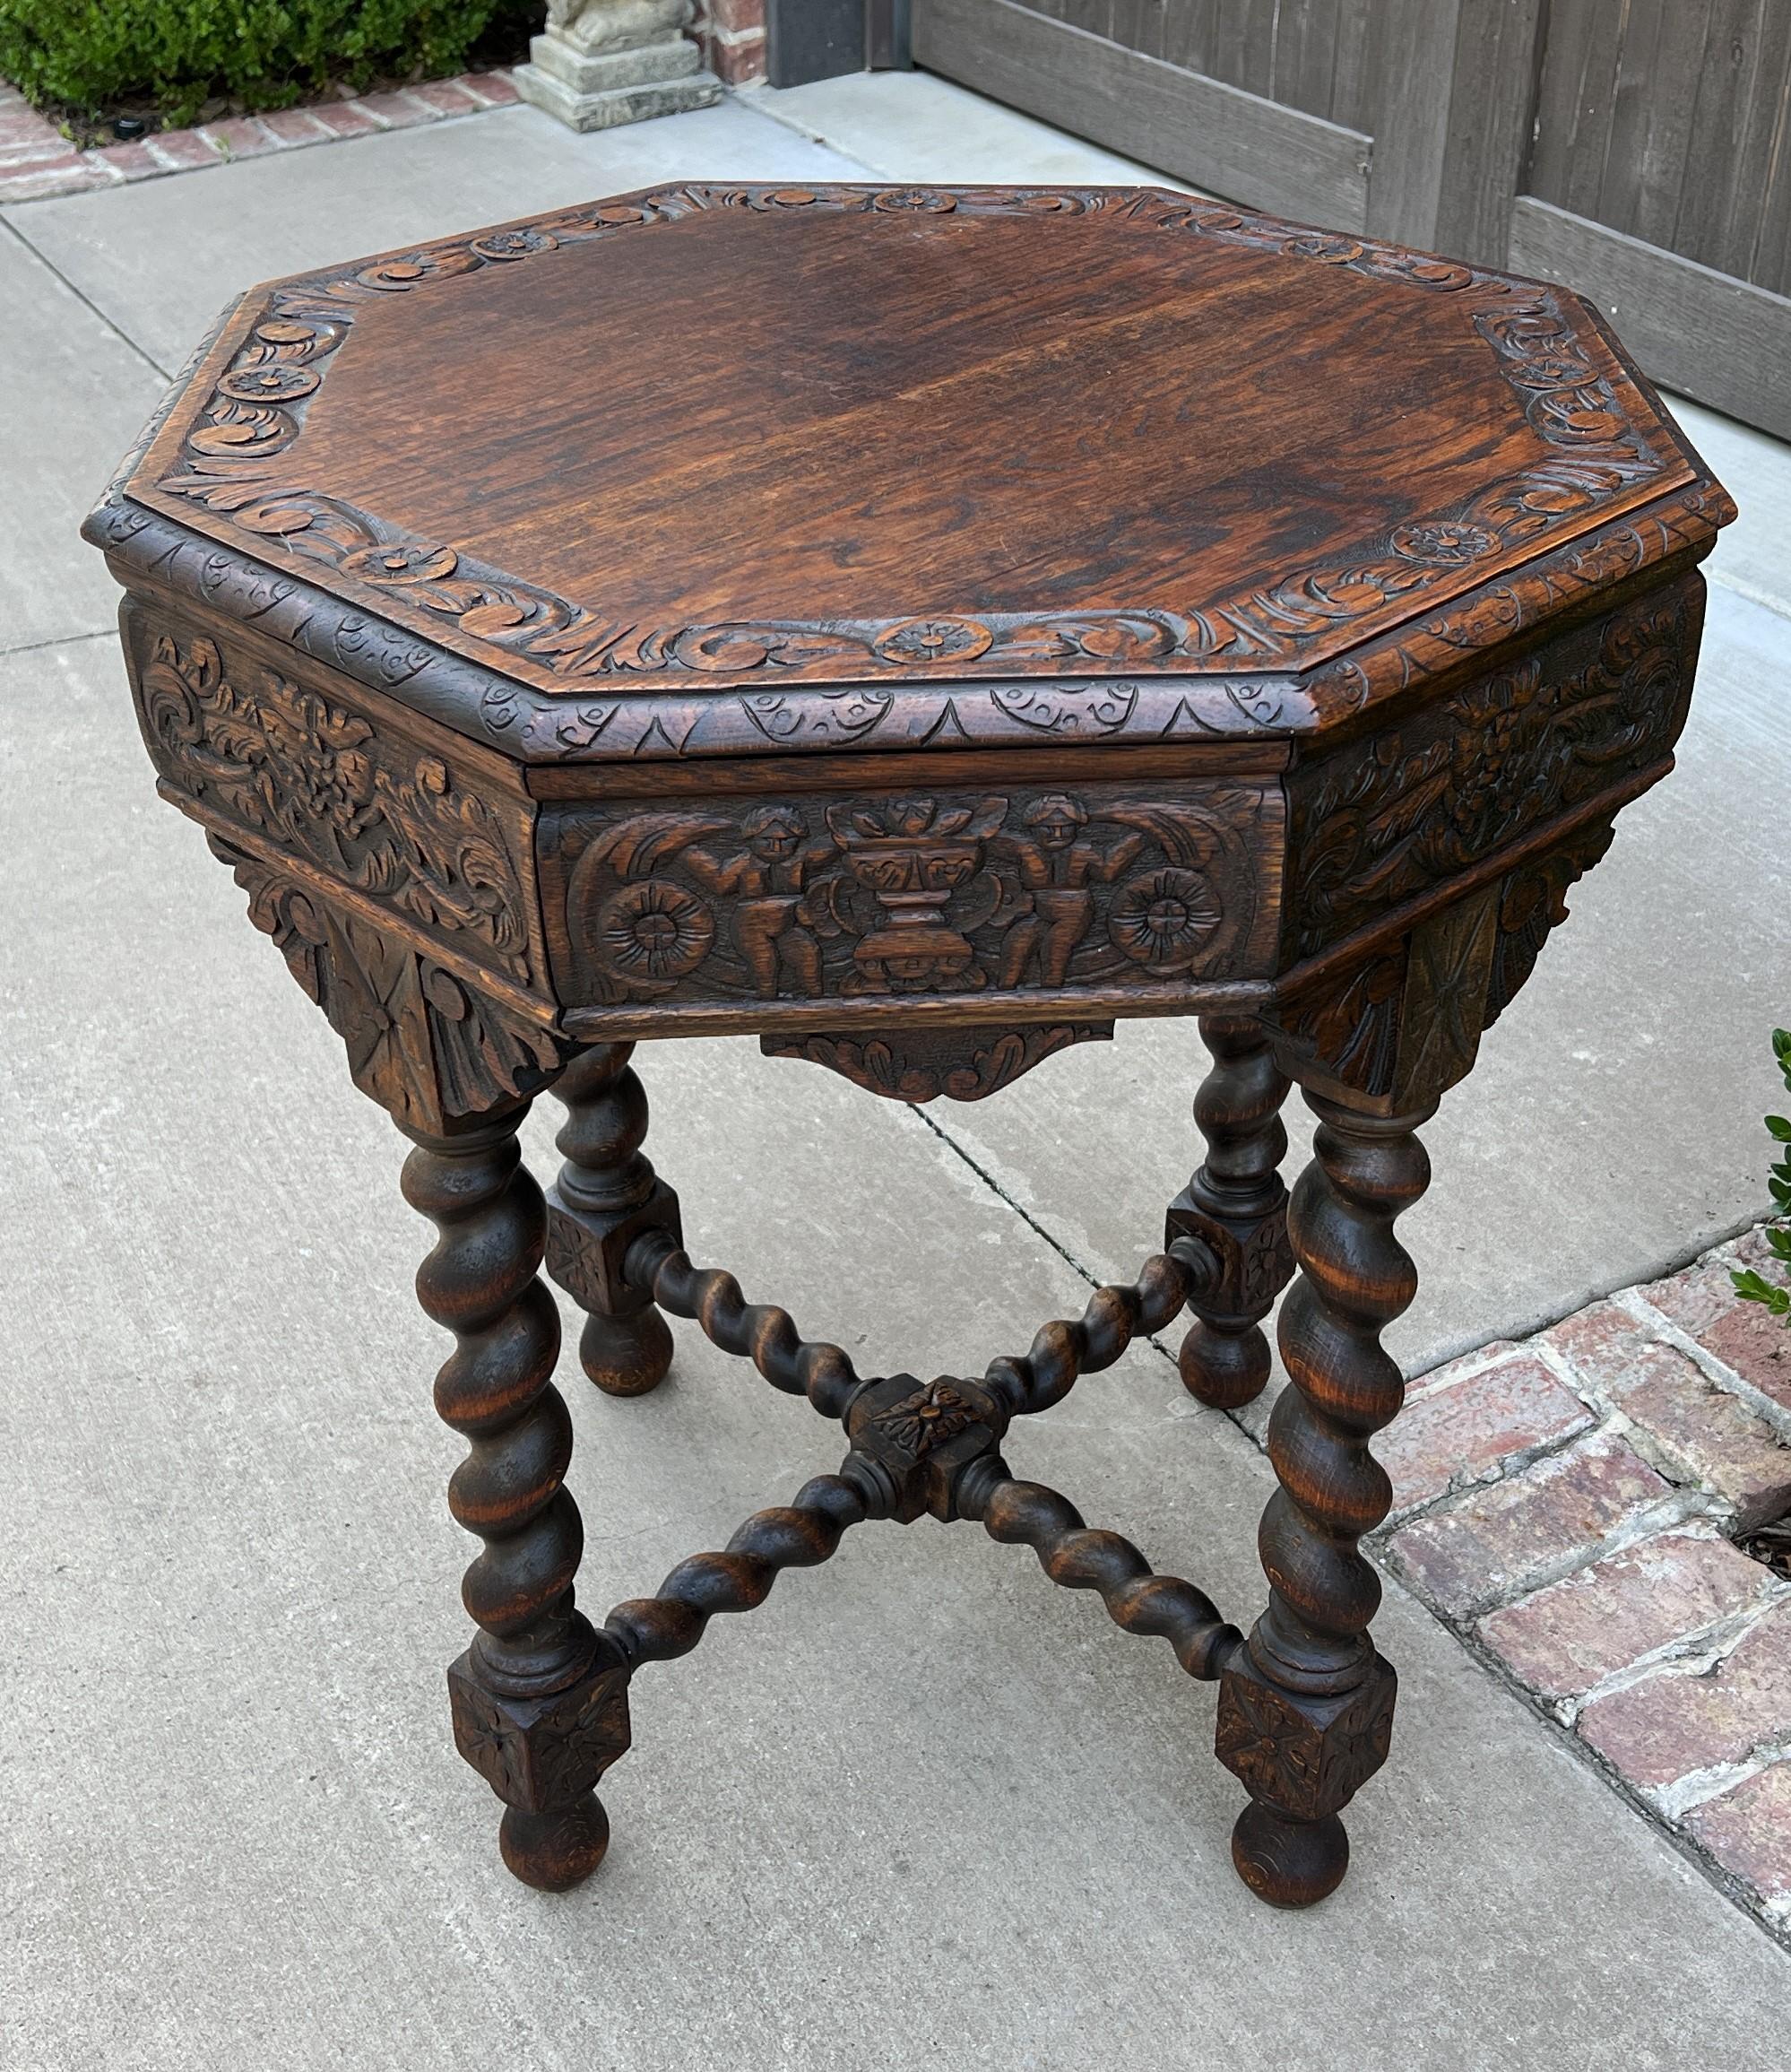 Antique French Table Barley Twist Octagonal Renaissance Revival Carved Oak 19thc For Sale 4